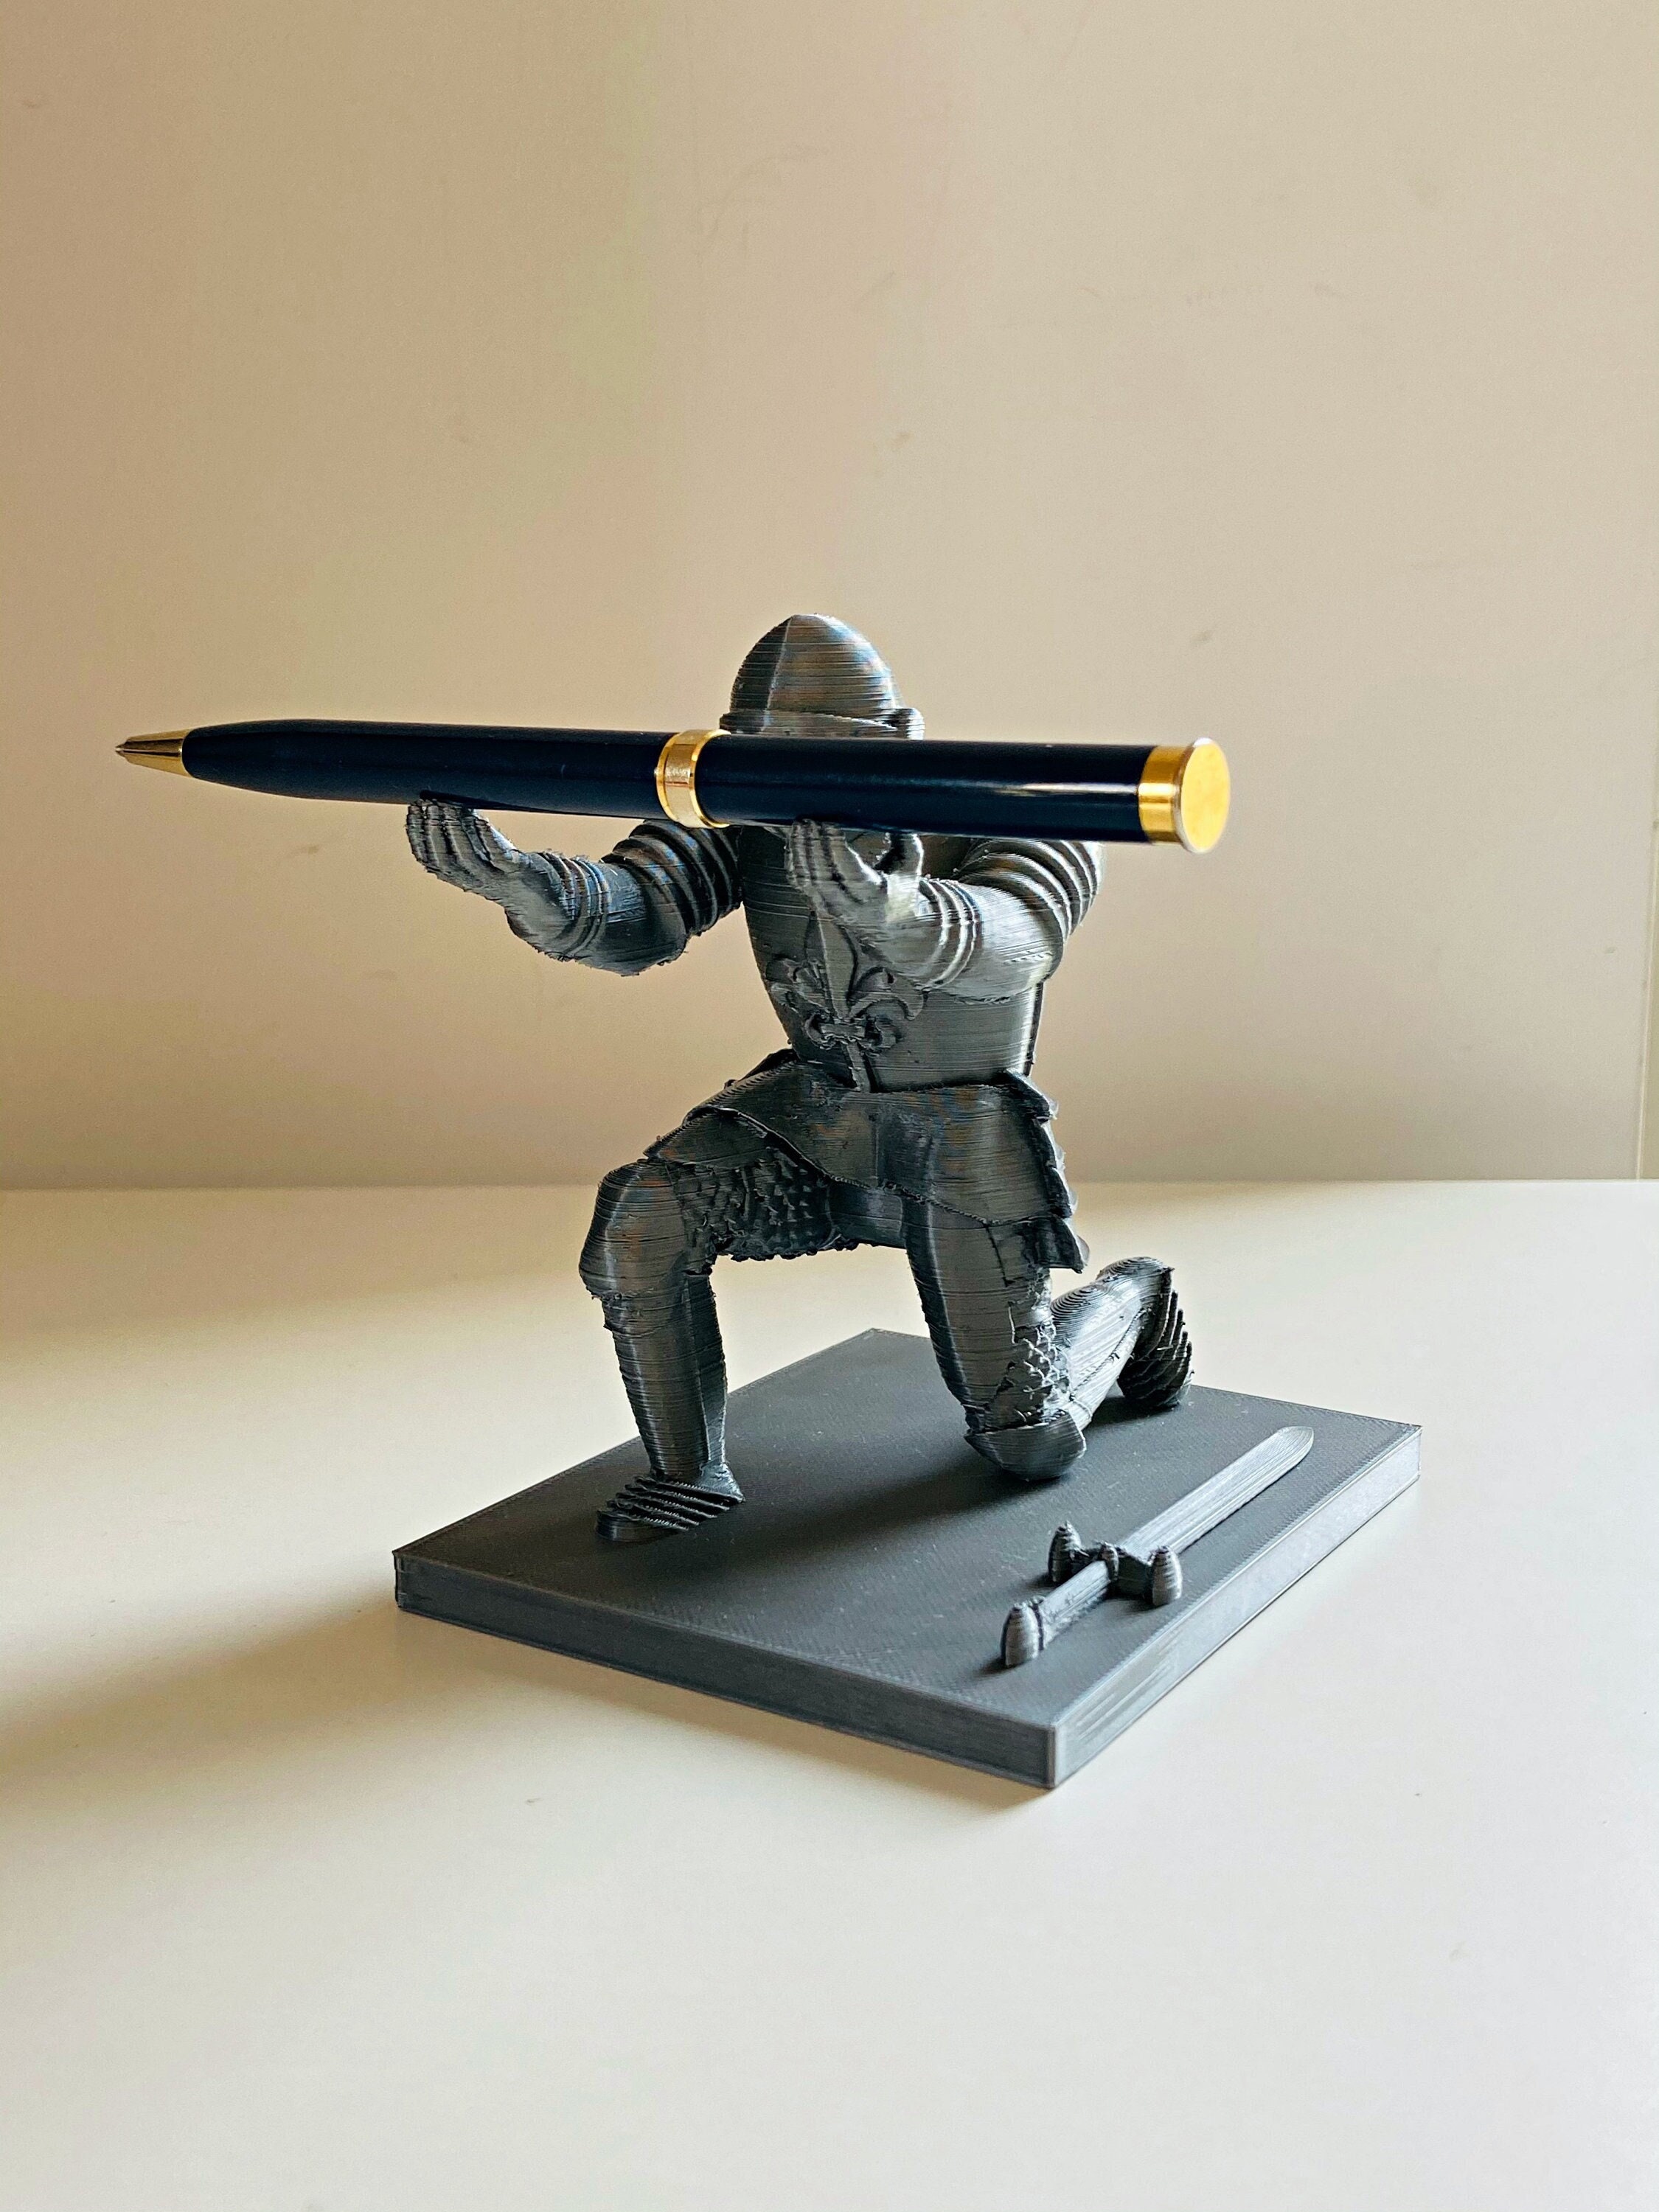 Magnetic Pen Holder For Desk, Knight Pen Holder Cool Desk Accessories,  Roman Commander Kneeling Pencil Holders Finish Statue With Sword Holder 